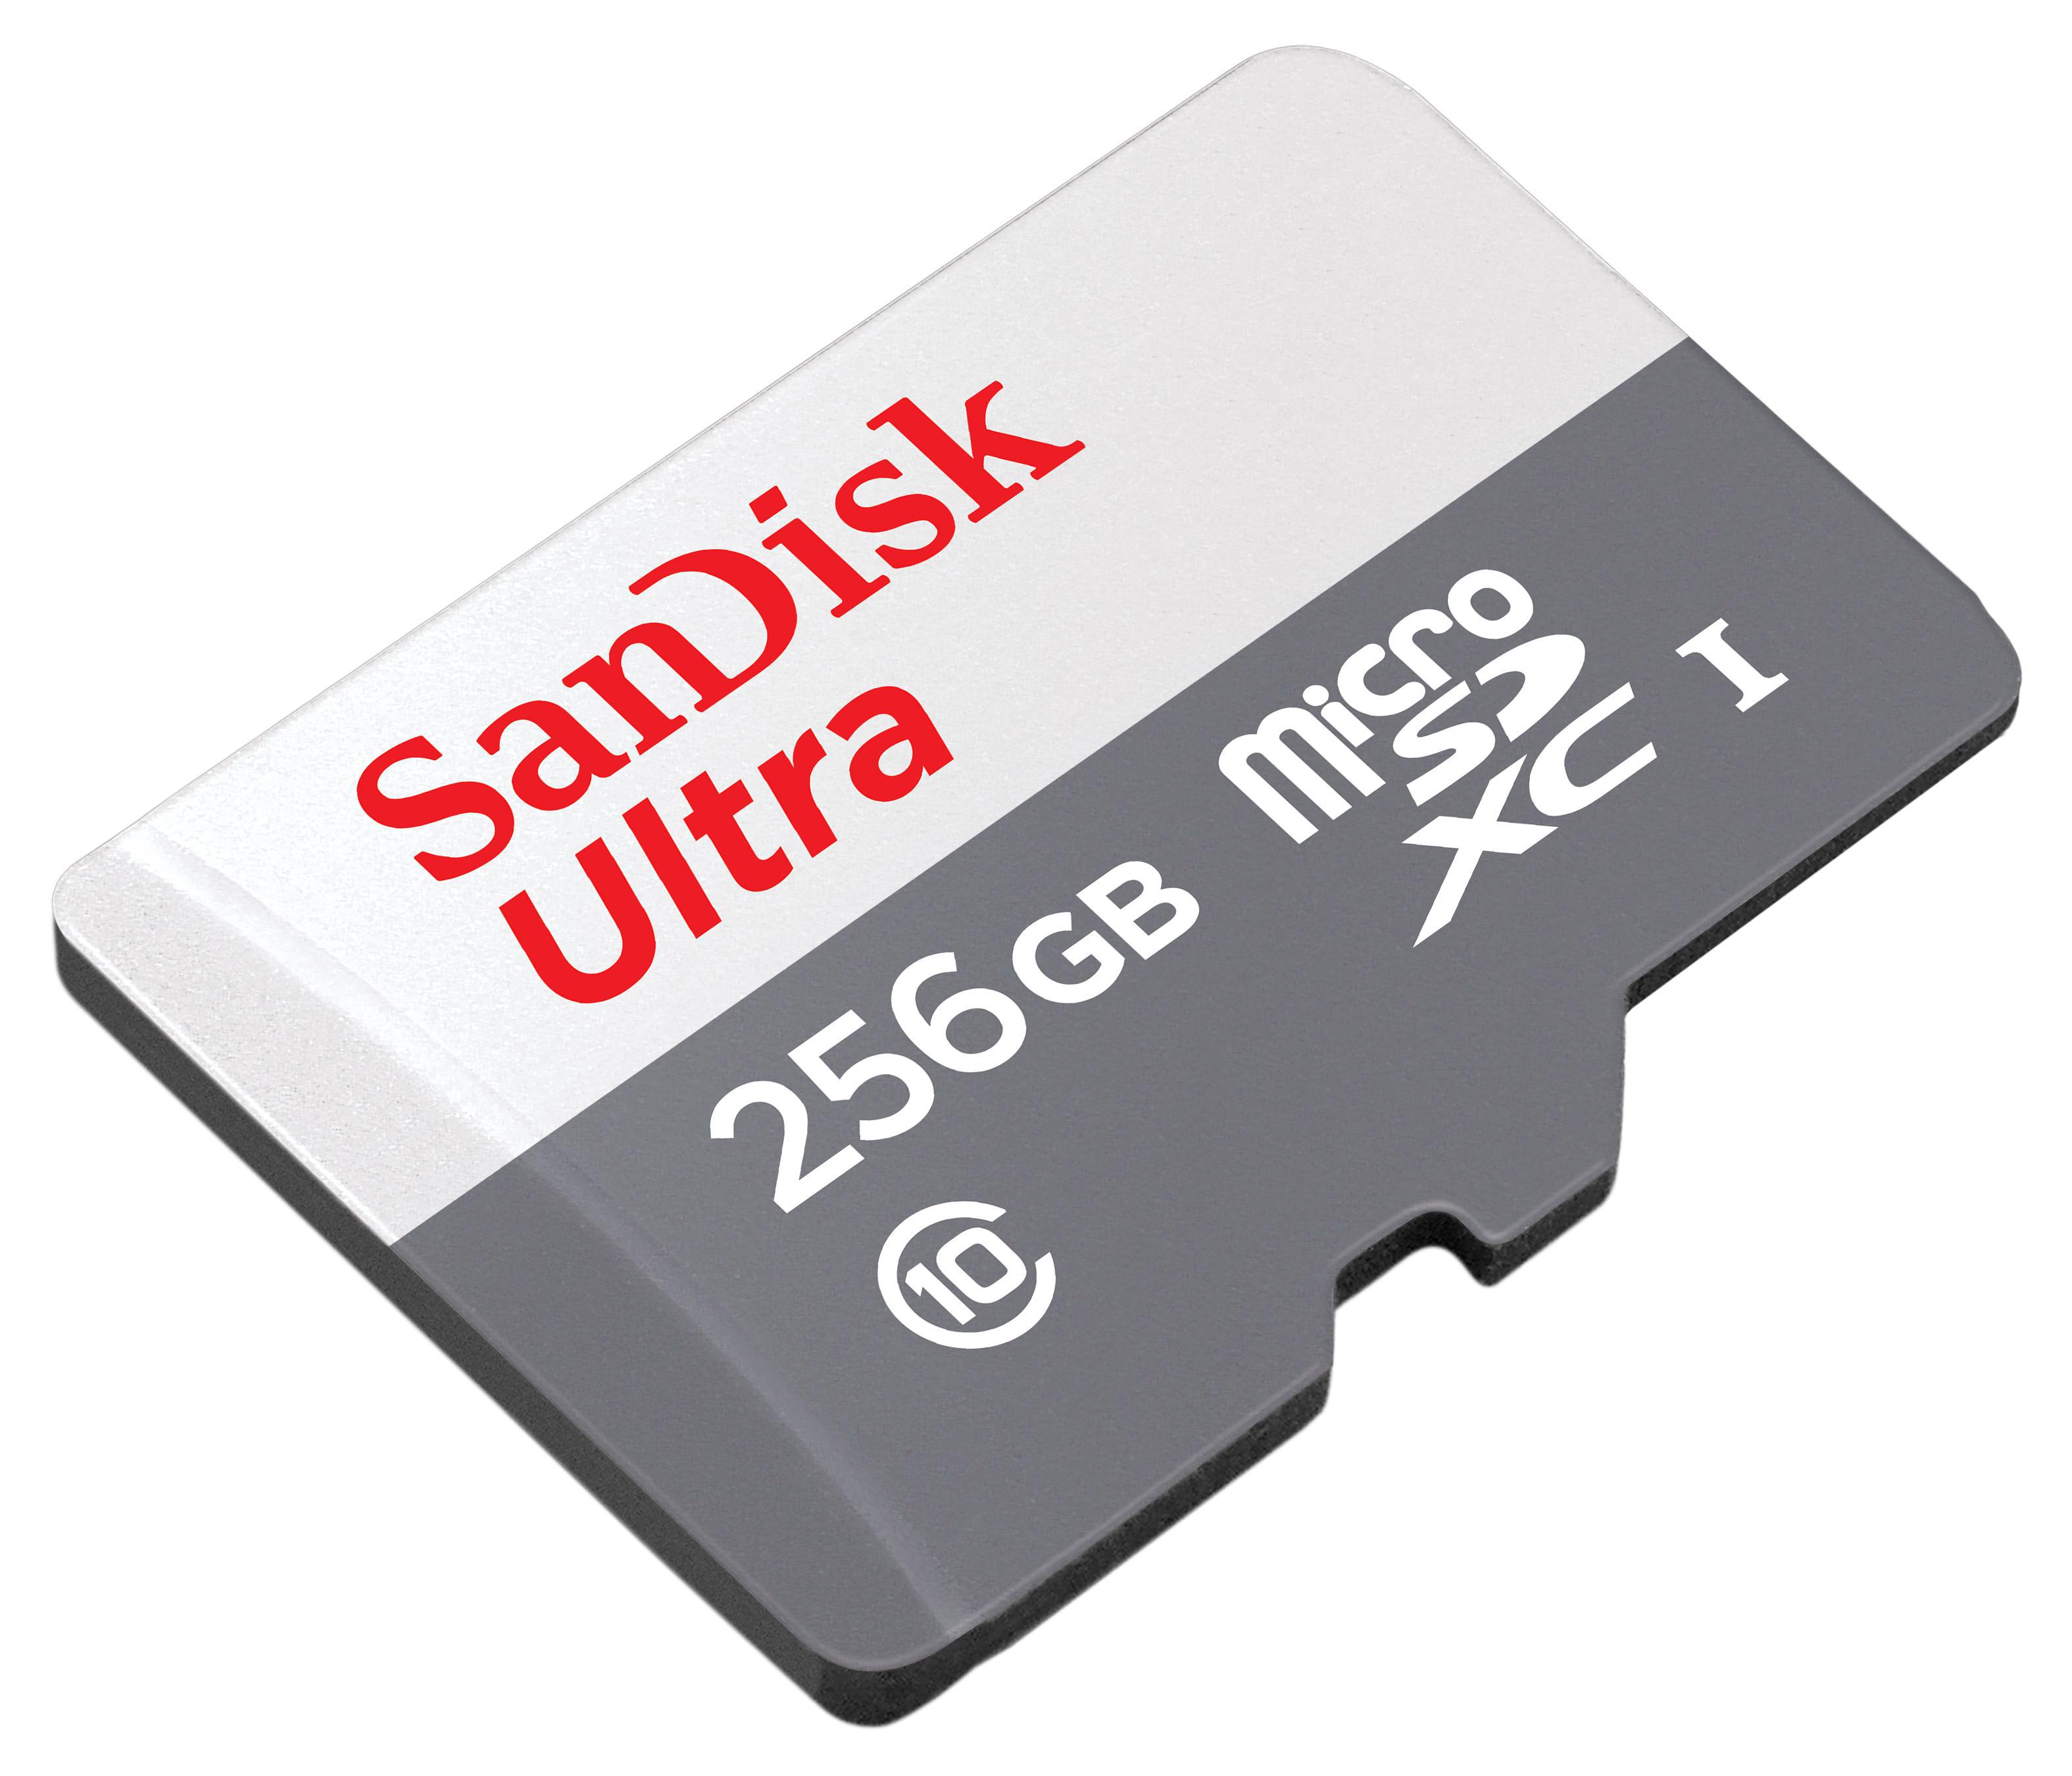 SANDISK Ultra UHS-I mit Tablets, MB/s 120 256 Speicherkarte, GB, Adapter für Micro-SDXC